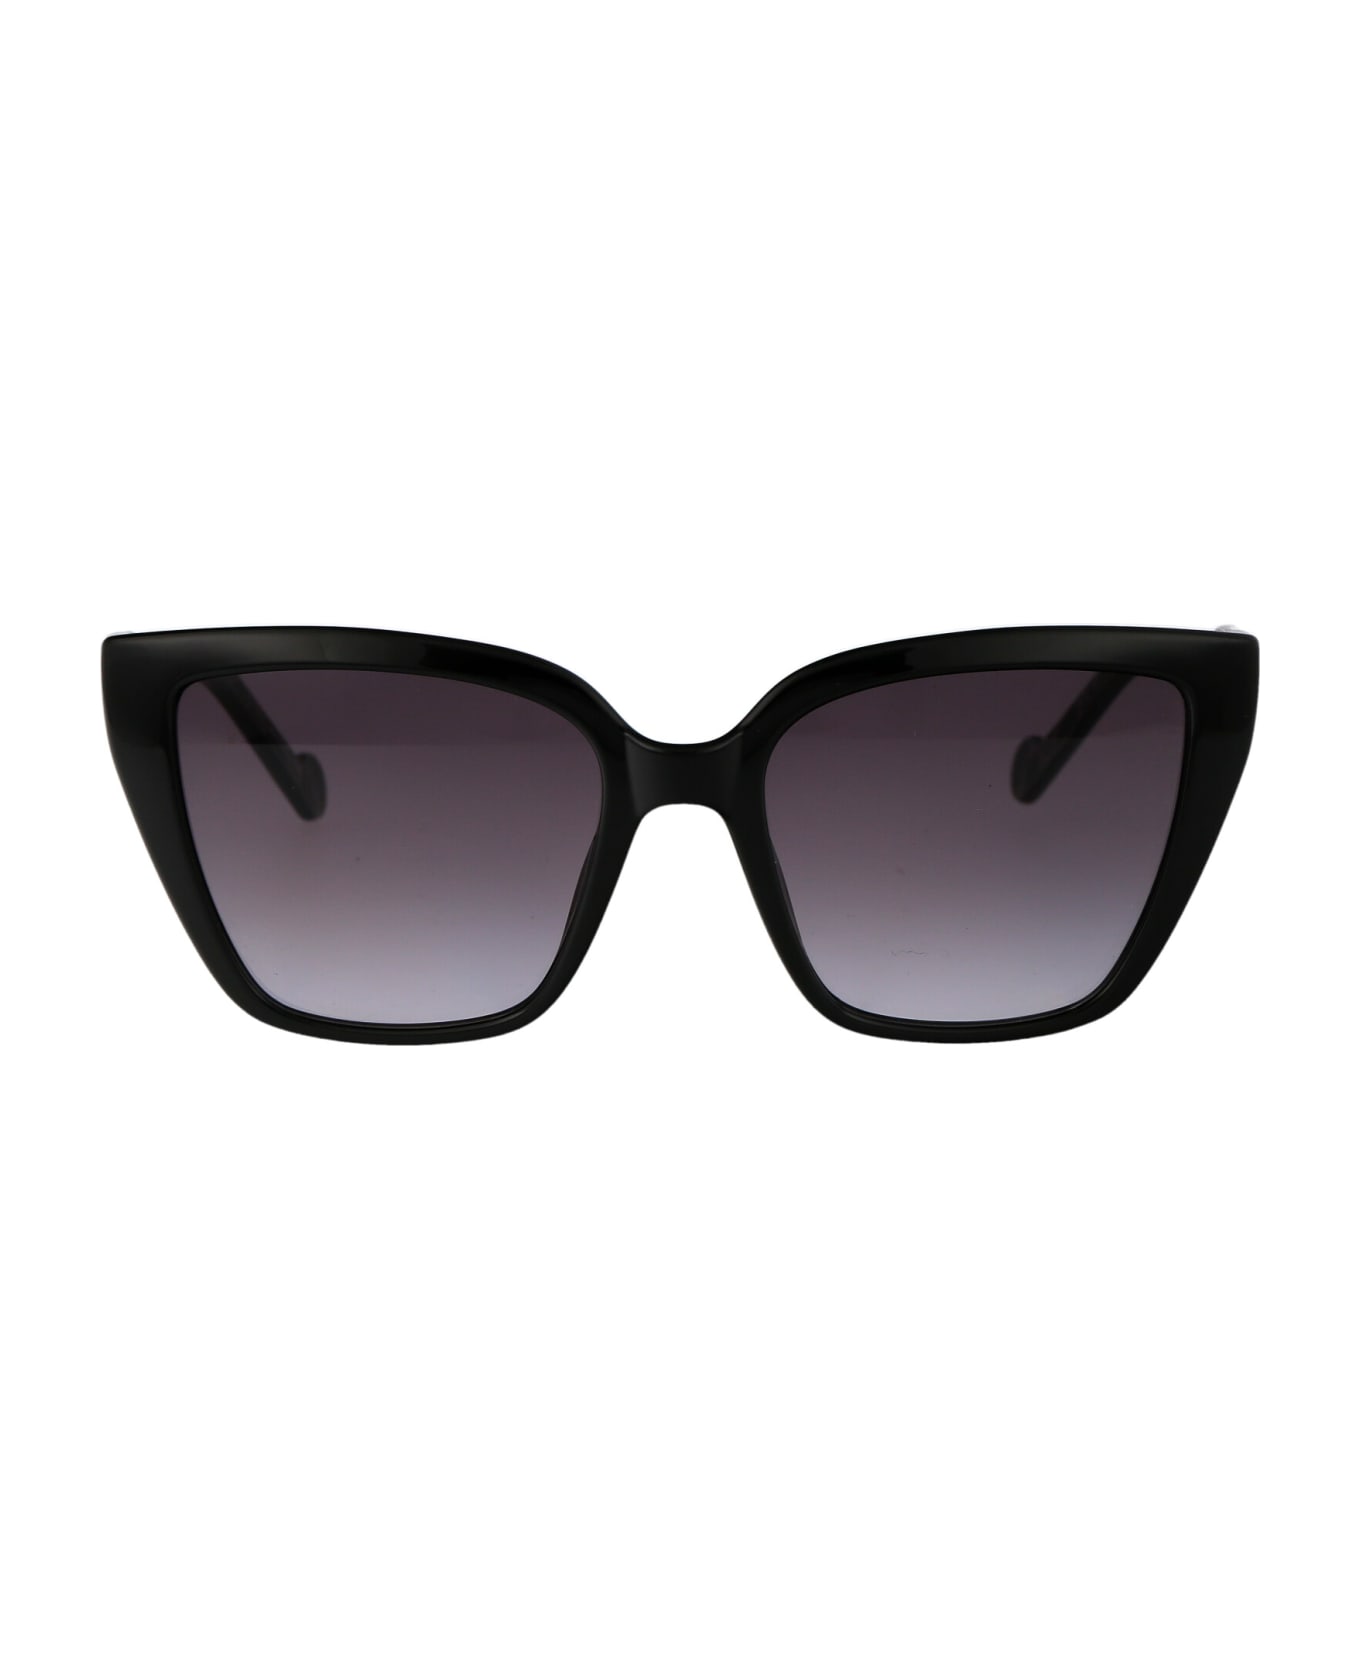 Liu-Jo Lj749s Sunglasses - 001 BLACK